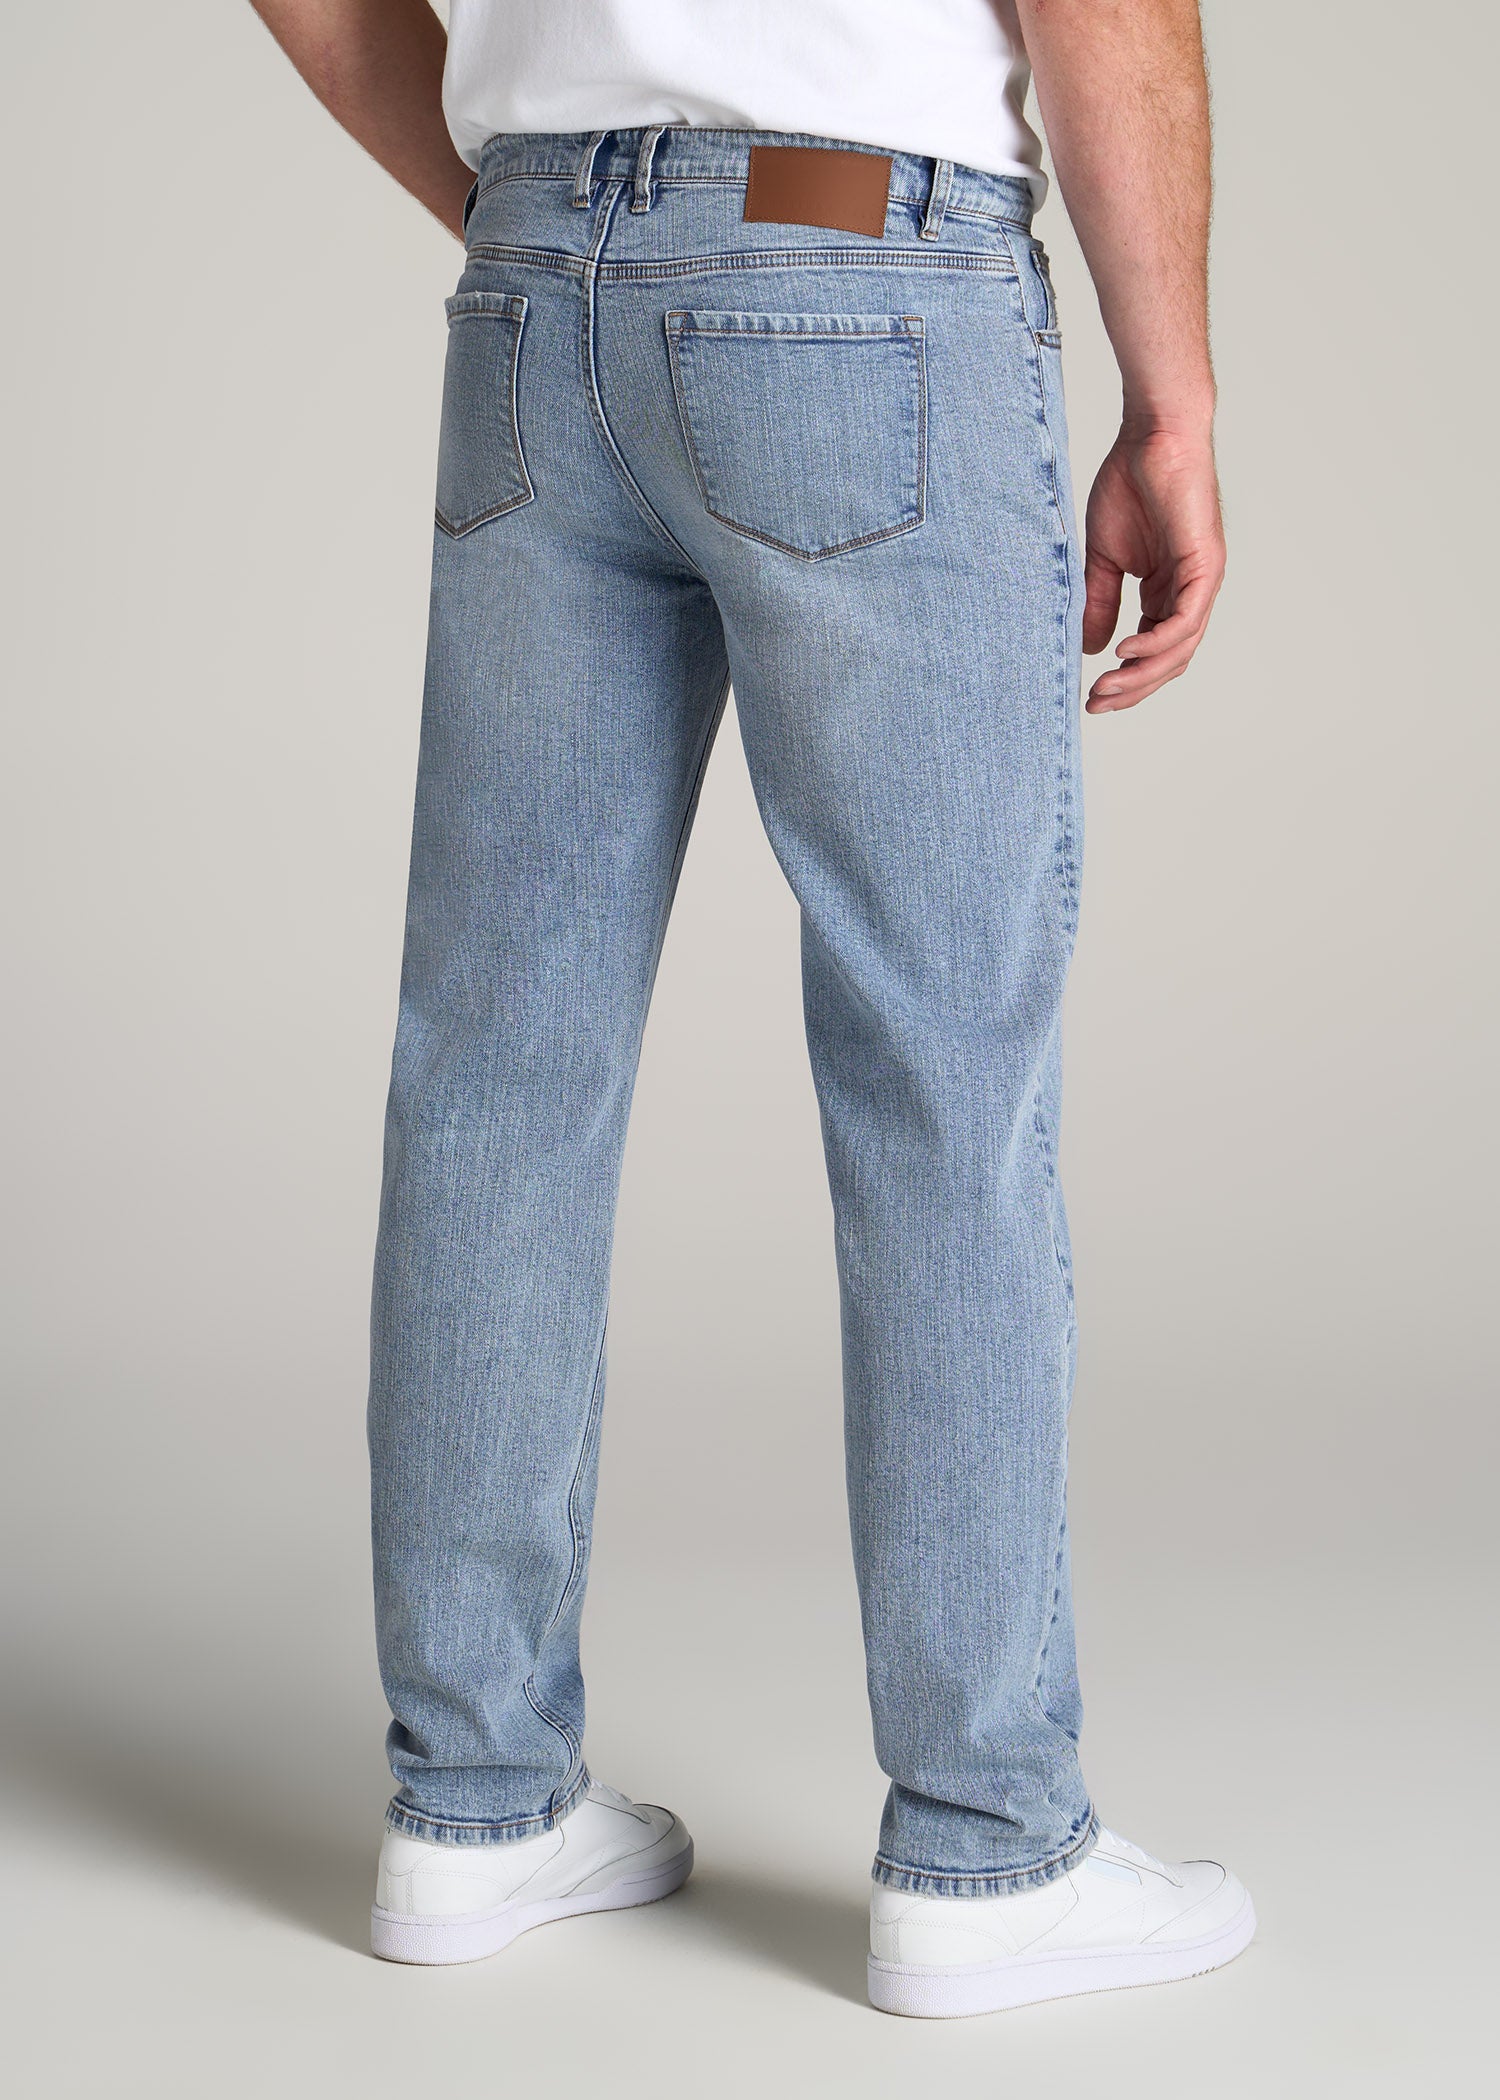       American-Tall-Men-J1-Jeans-Retro-Blue-back